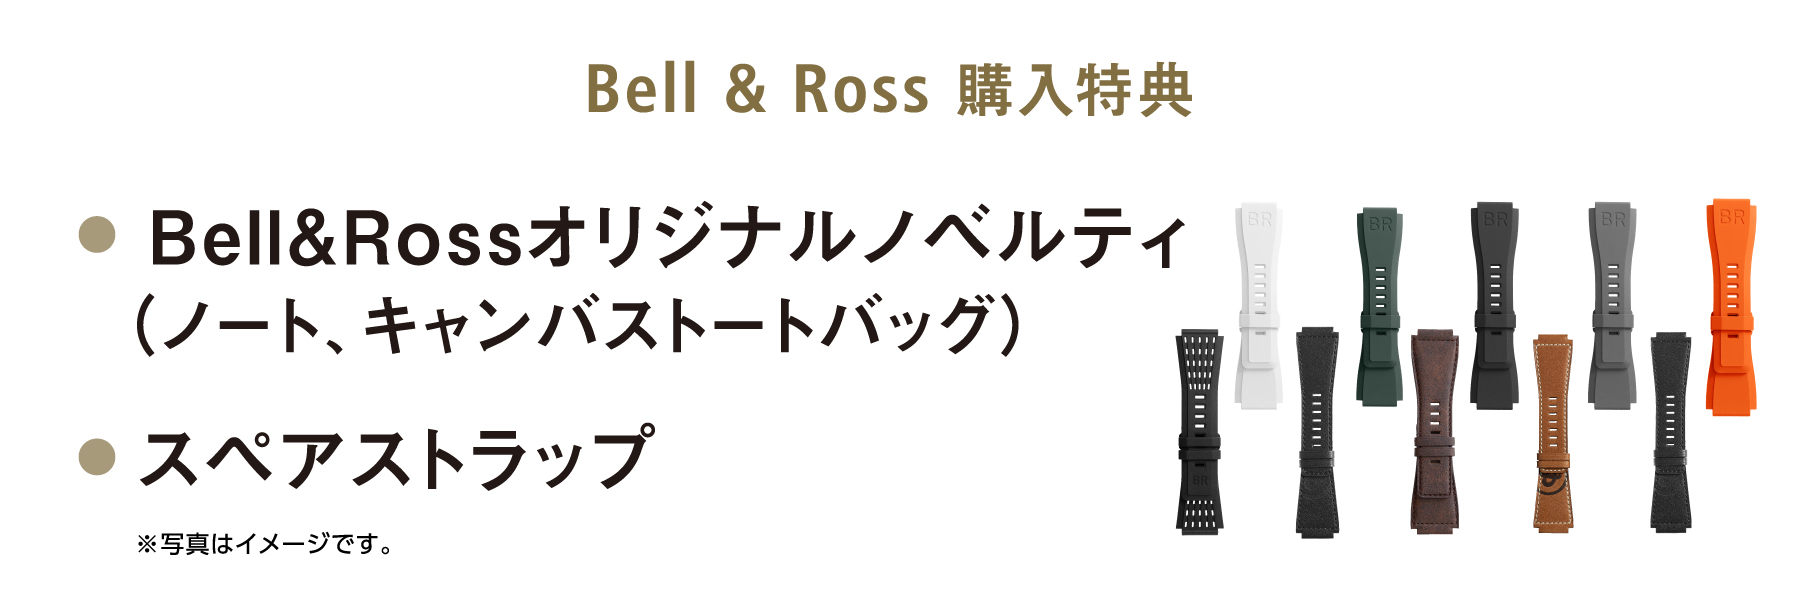 Bell&Rossオリジナルノベルティ（ノート、キャンバストートバッグ） スペアストラップ